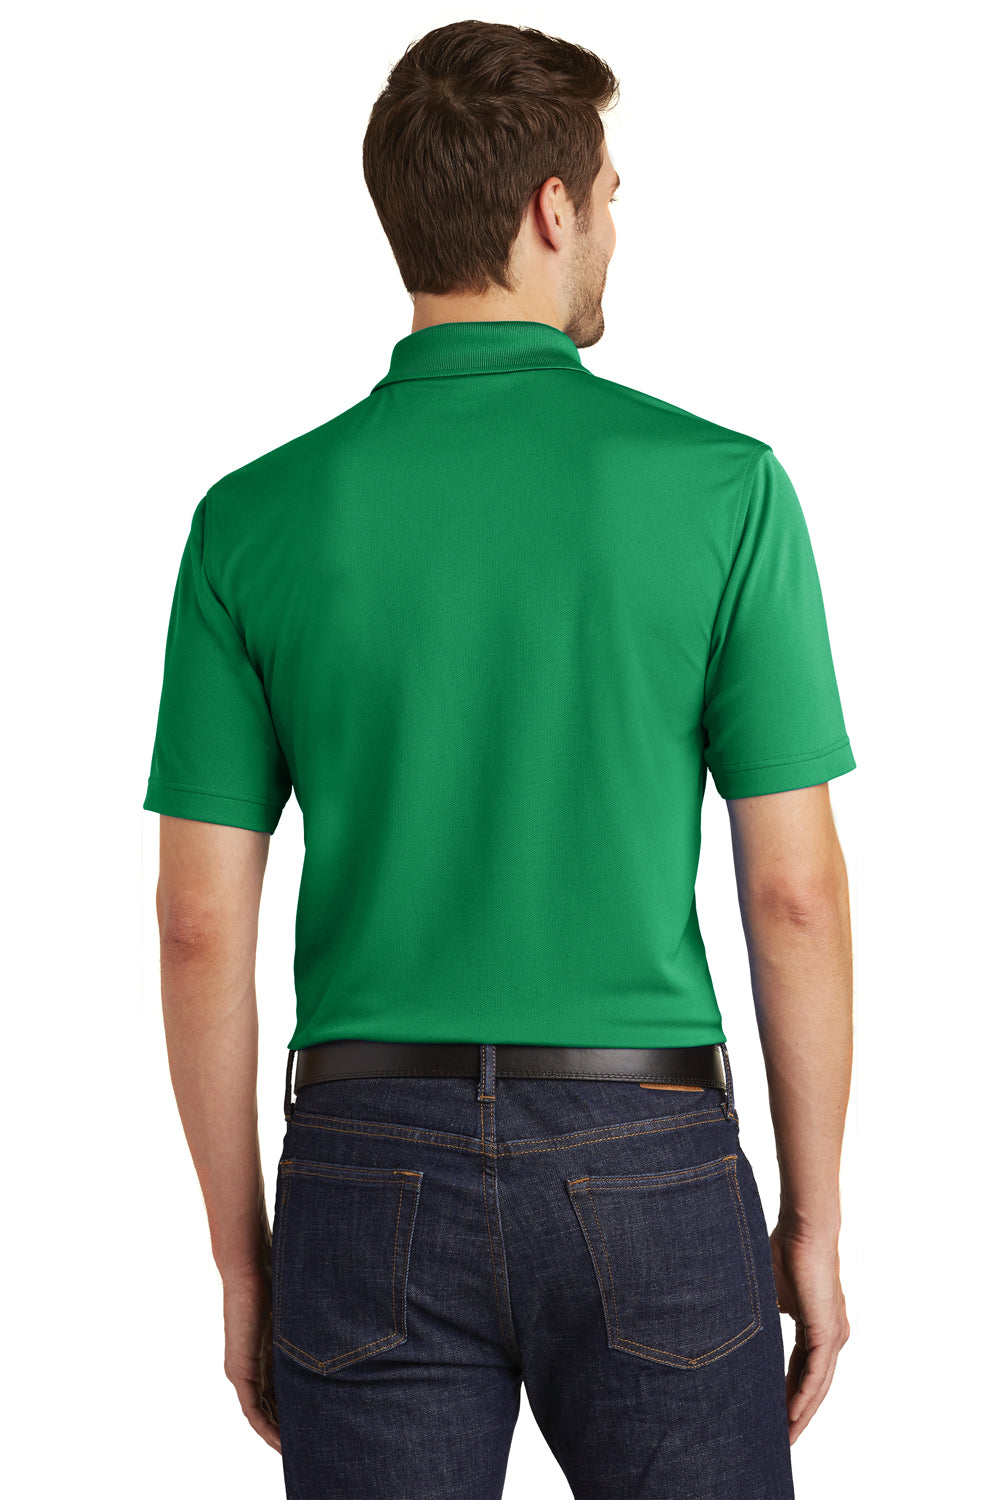 Port Authority K110 Mens Dry Zone Moisture Wicking Short Sleeve Polo Shirt Kelly Green Back